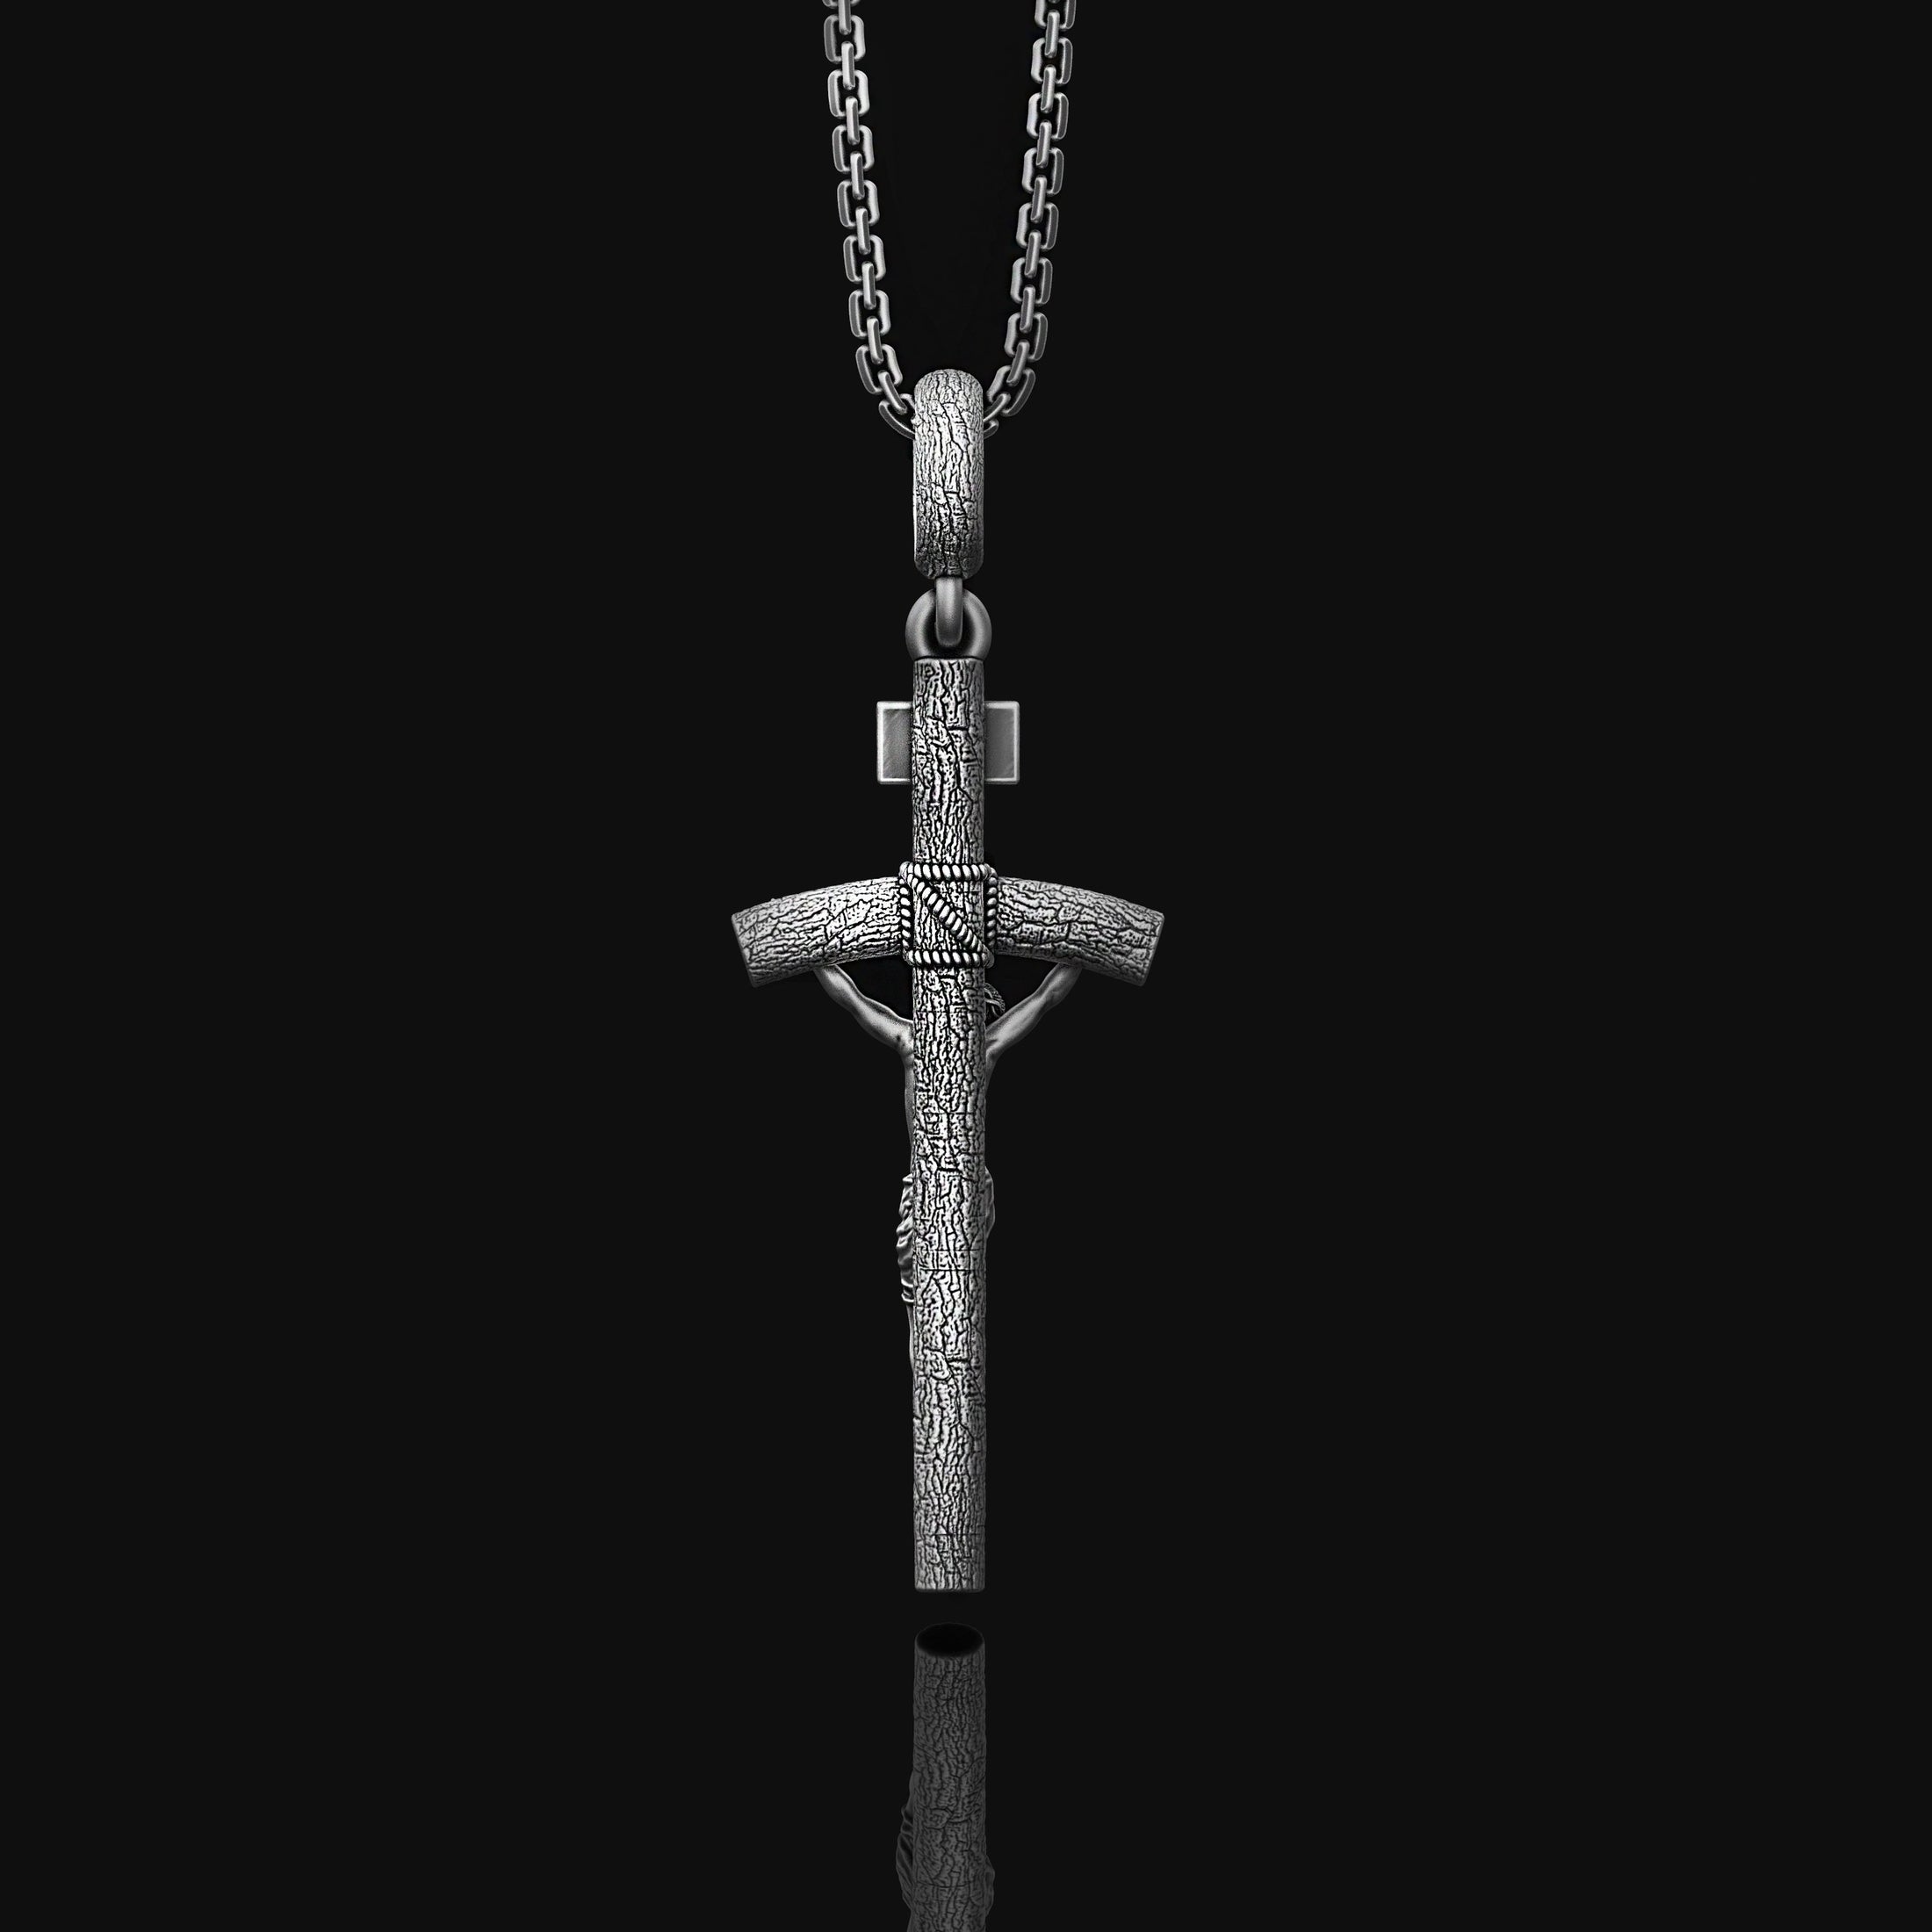 INRI Jesus Crucifix